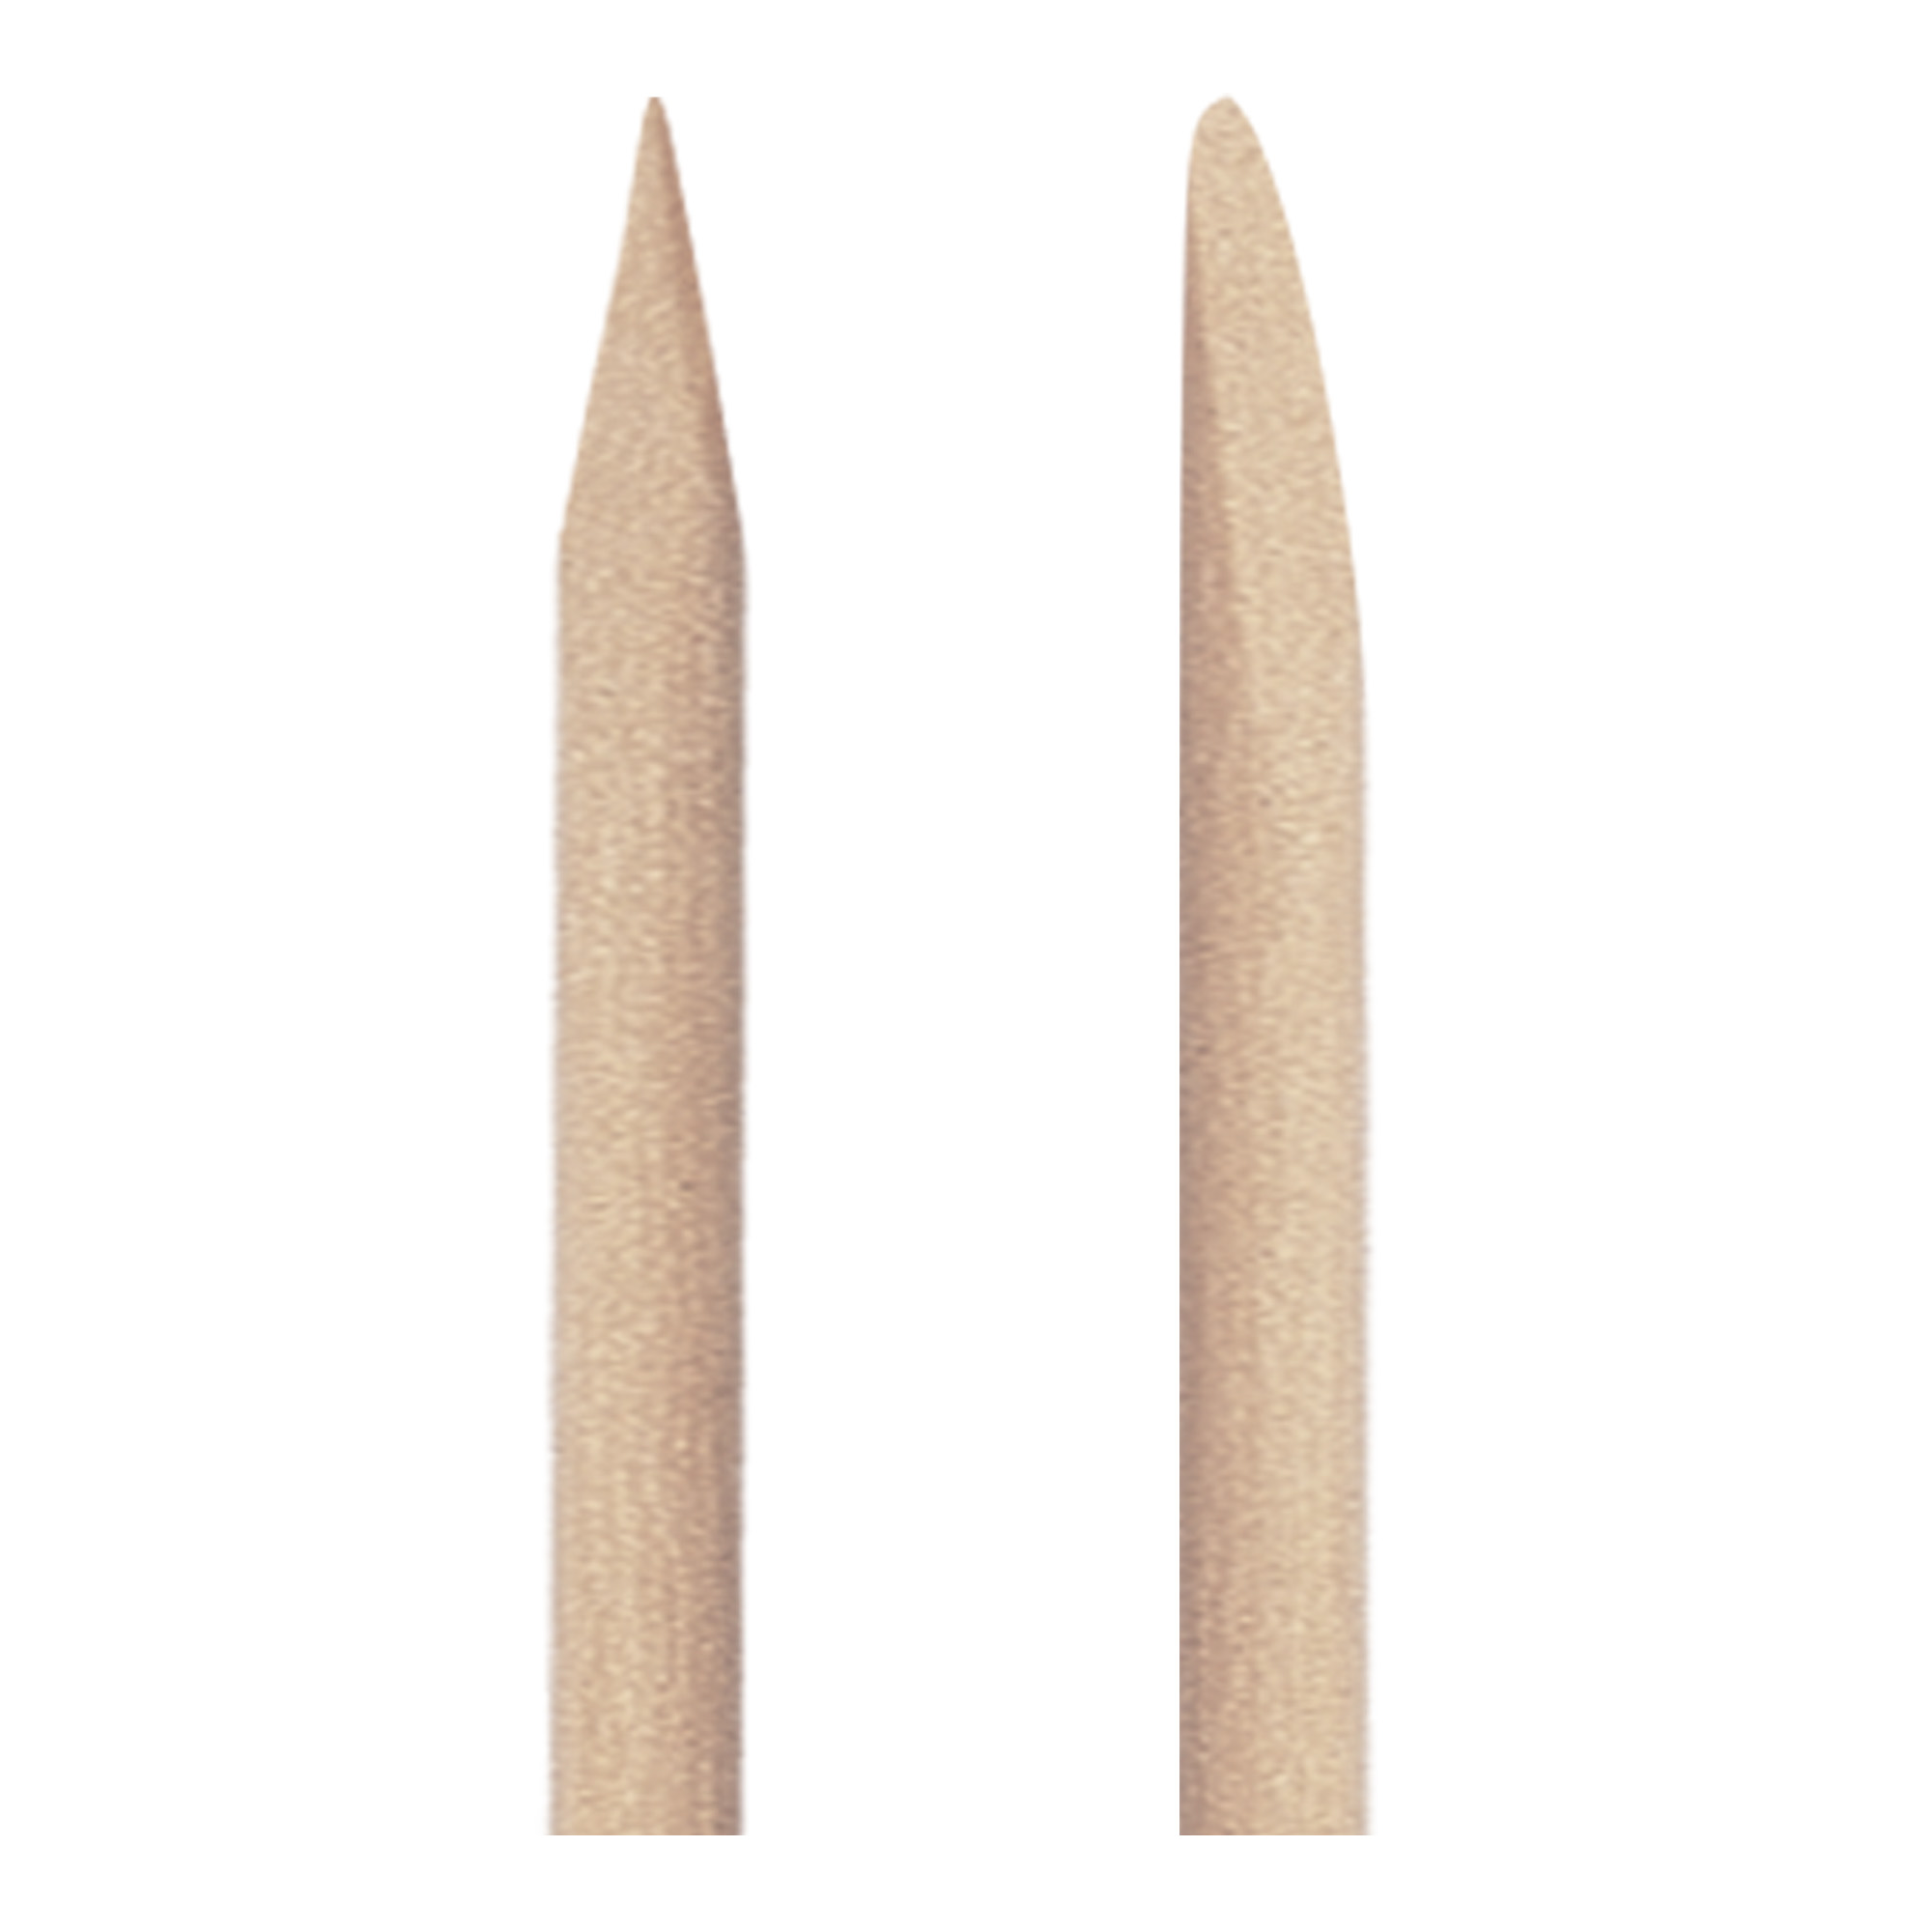 Wooden double-ended push sticks 8 pcs